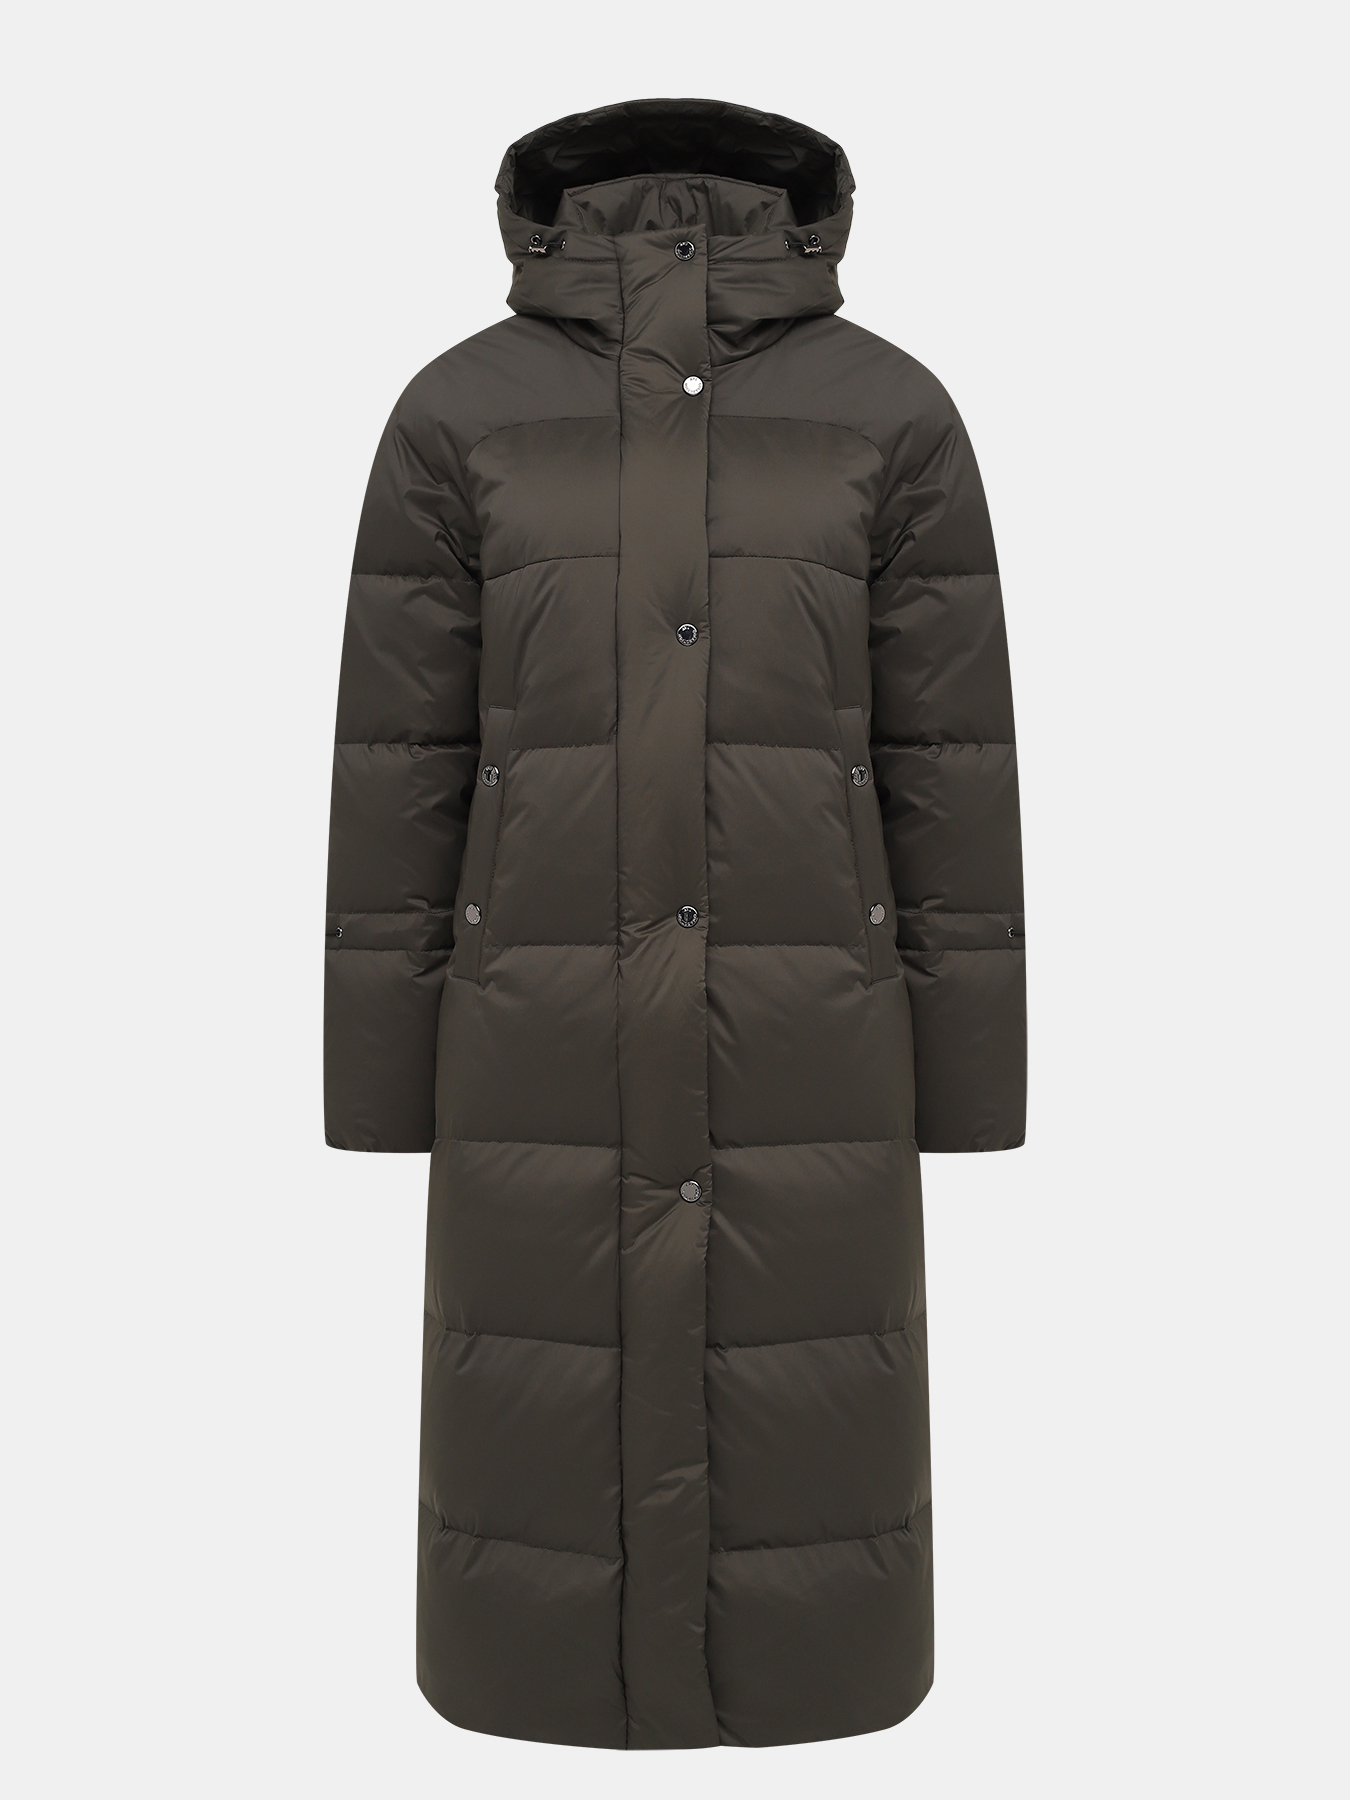 Пальто зимнее AVI 433638-024, цвет хаки, размер 52 - фото 1